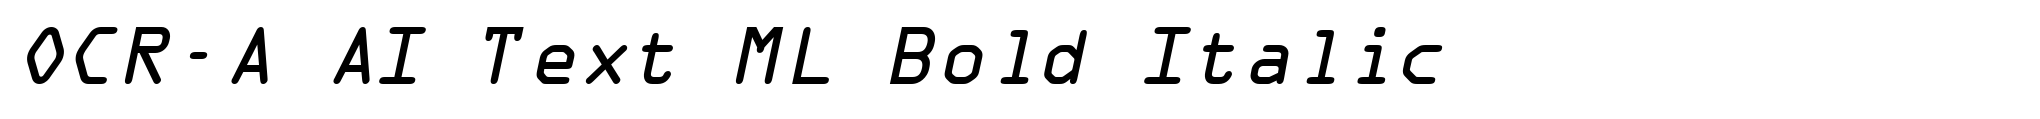 OCR-A AI Text ML Bold Italic image